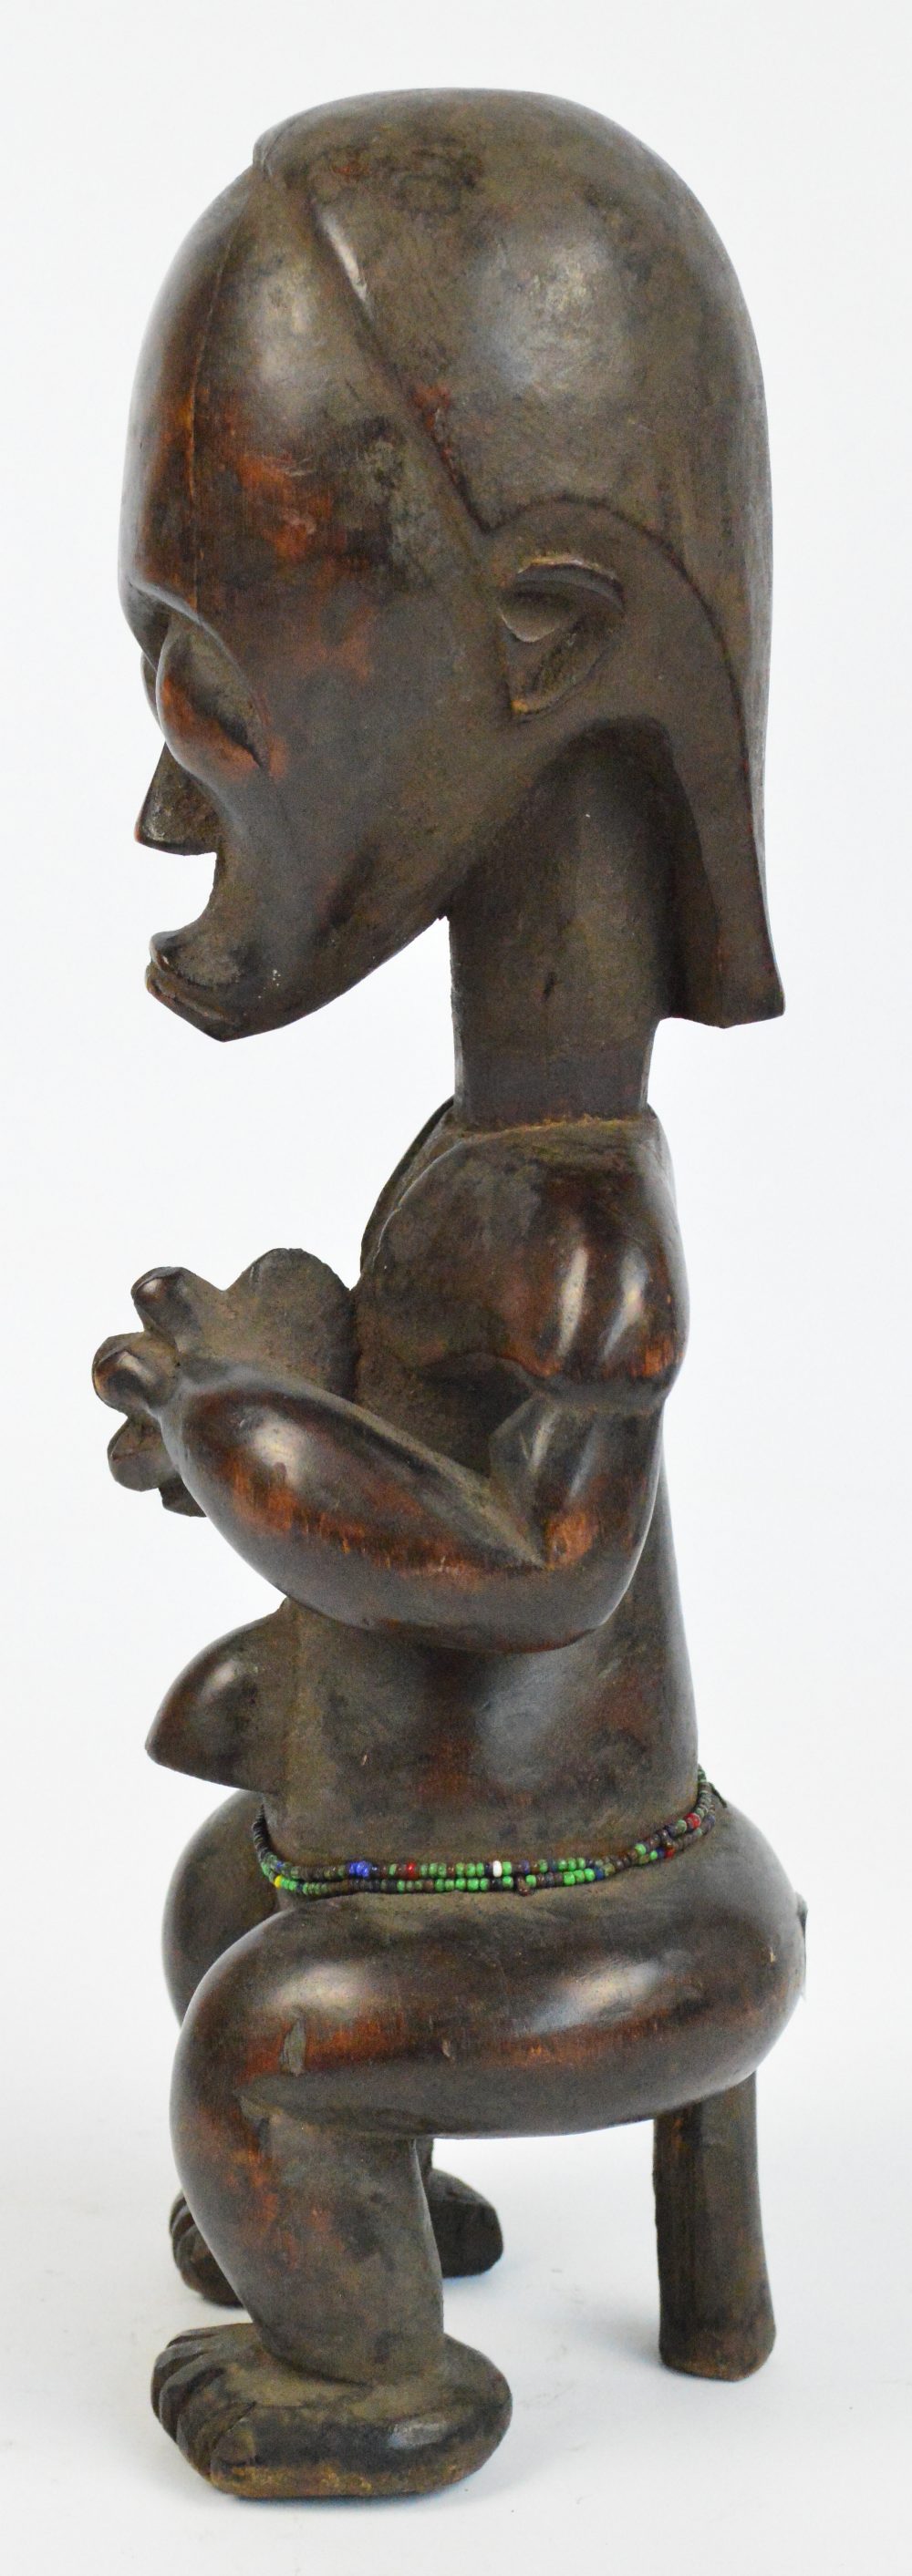 A Fang reliquary guardian figure, Equatorial Guinea or Western Gabon, - Image 4 of 6